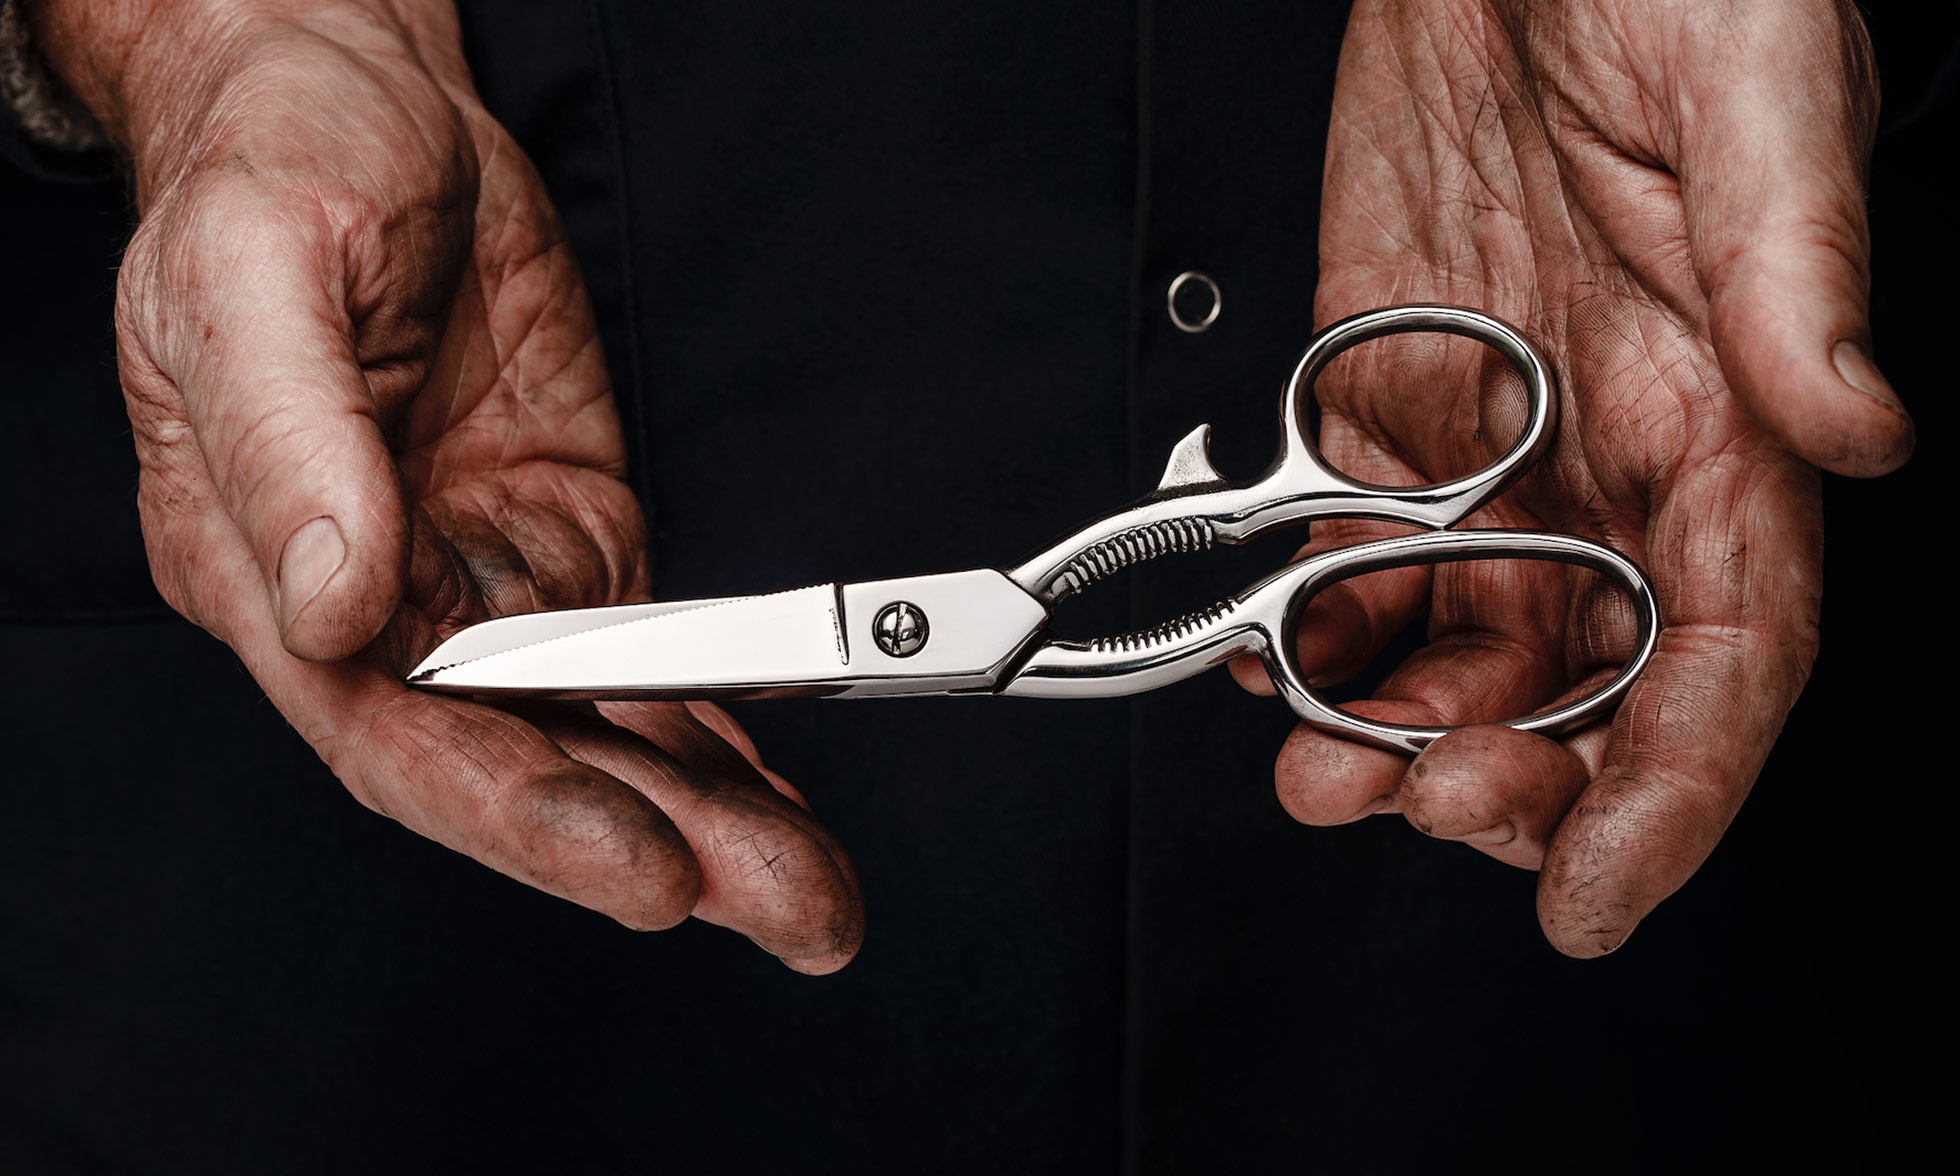 Craftsman holding scissors